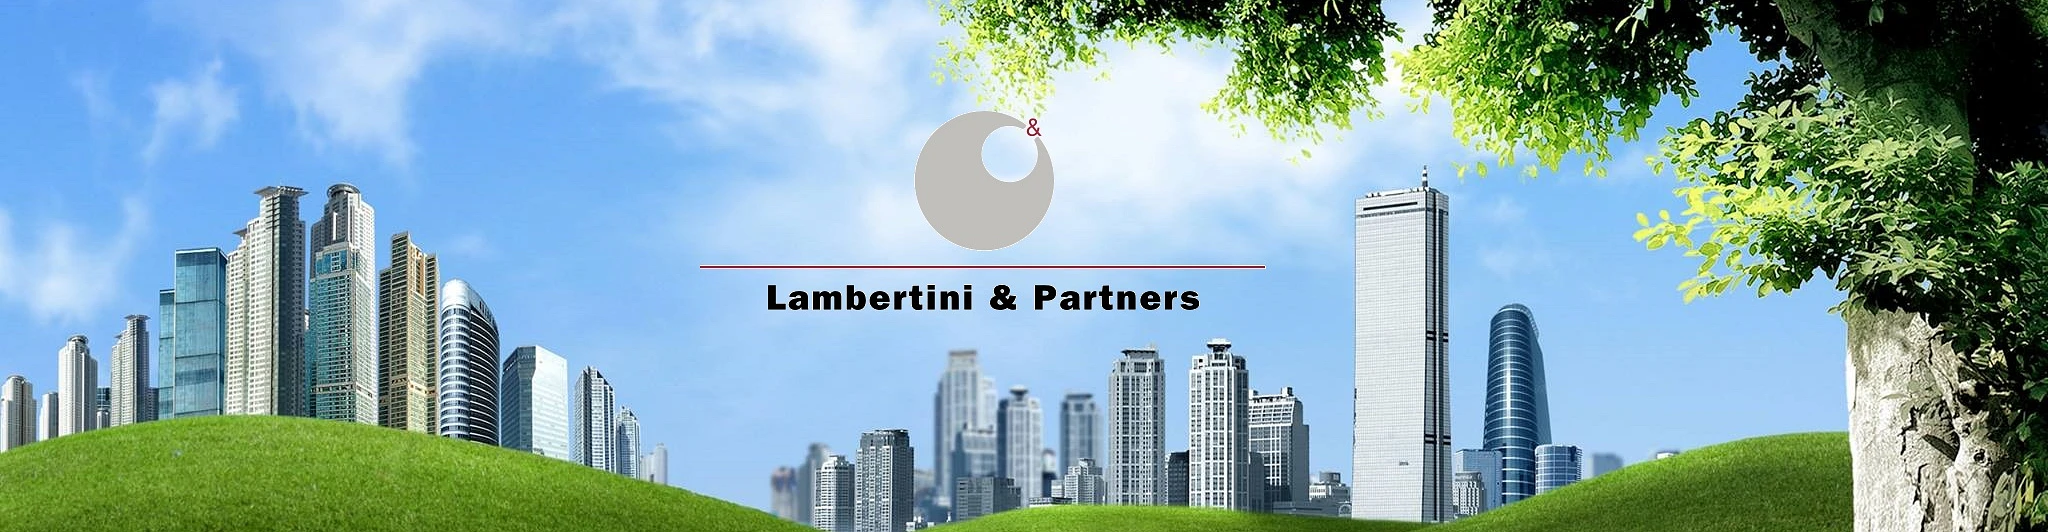 Lambertini & Partners Gestioni Immobiliari S.A.